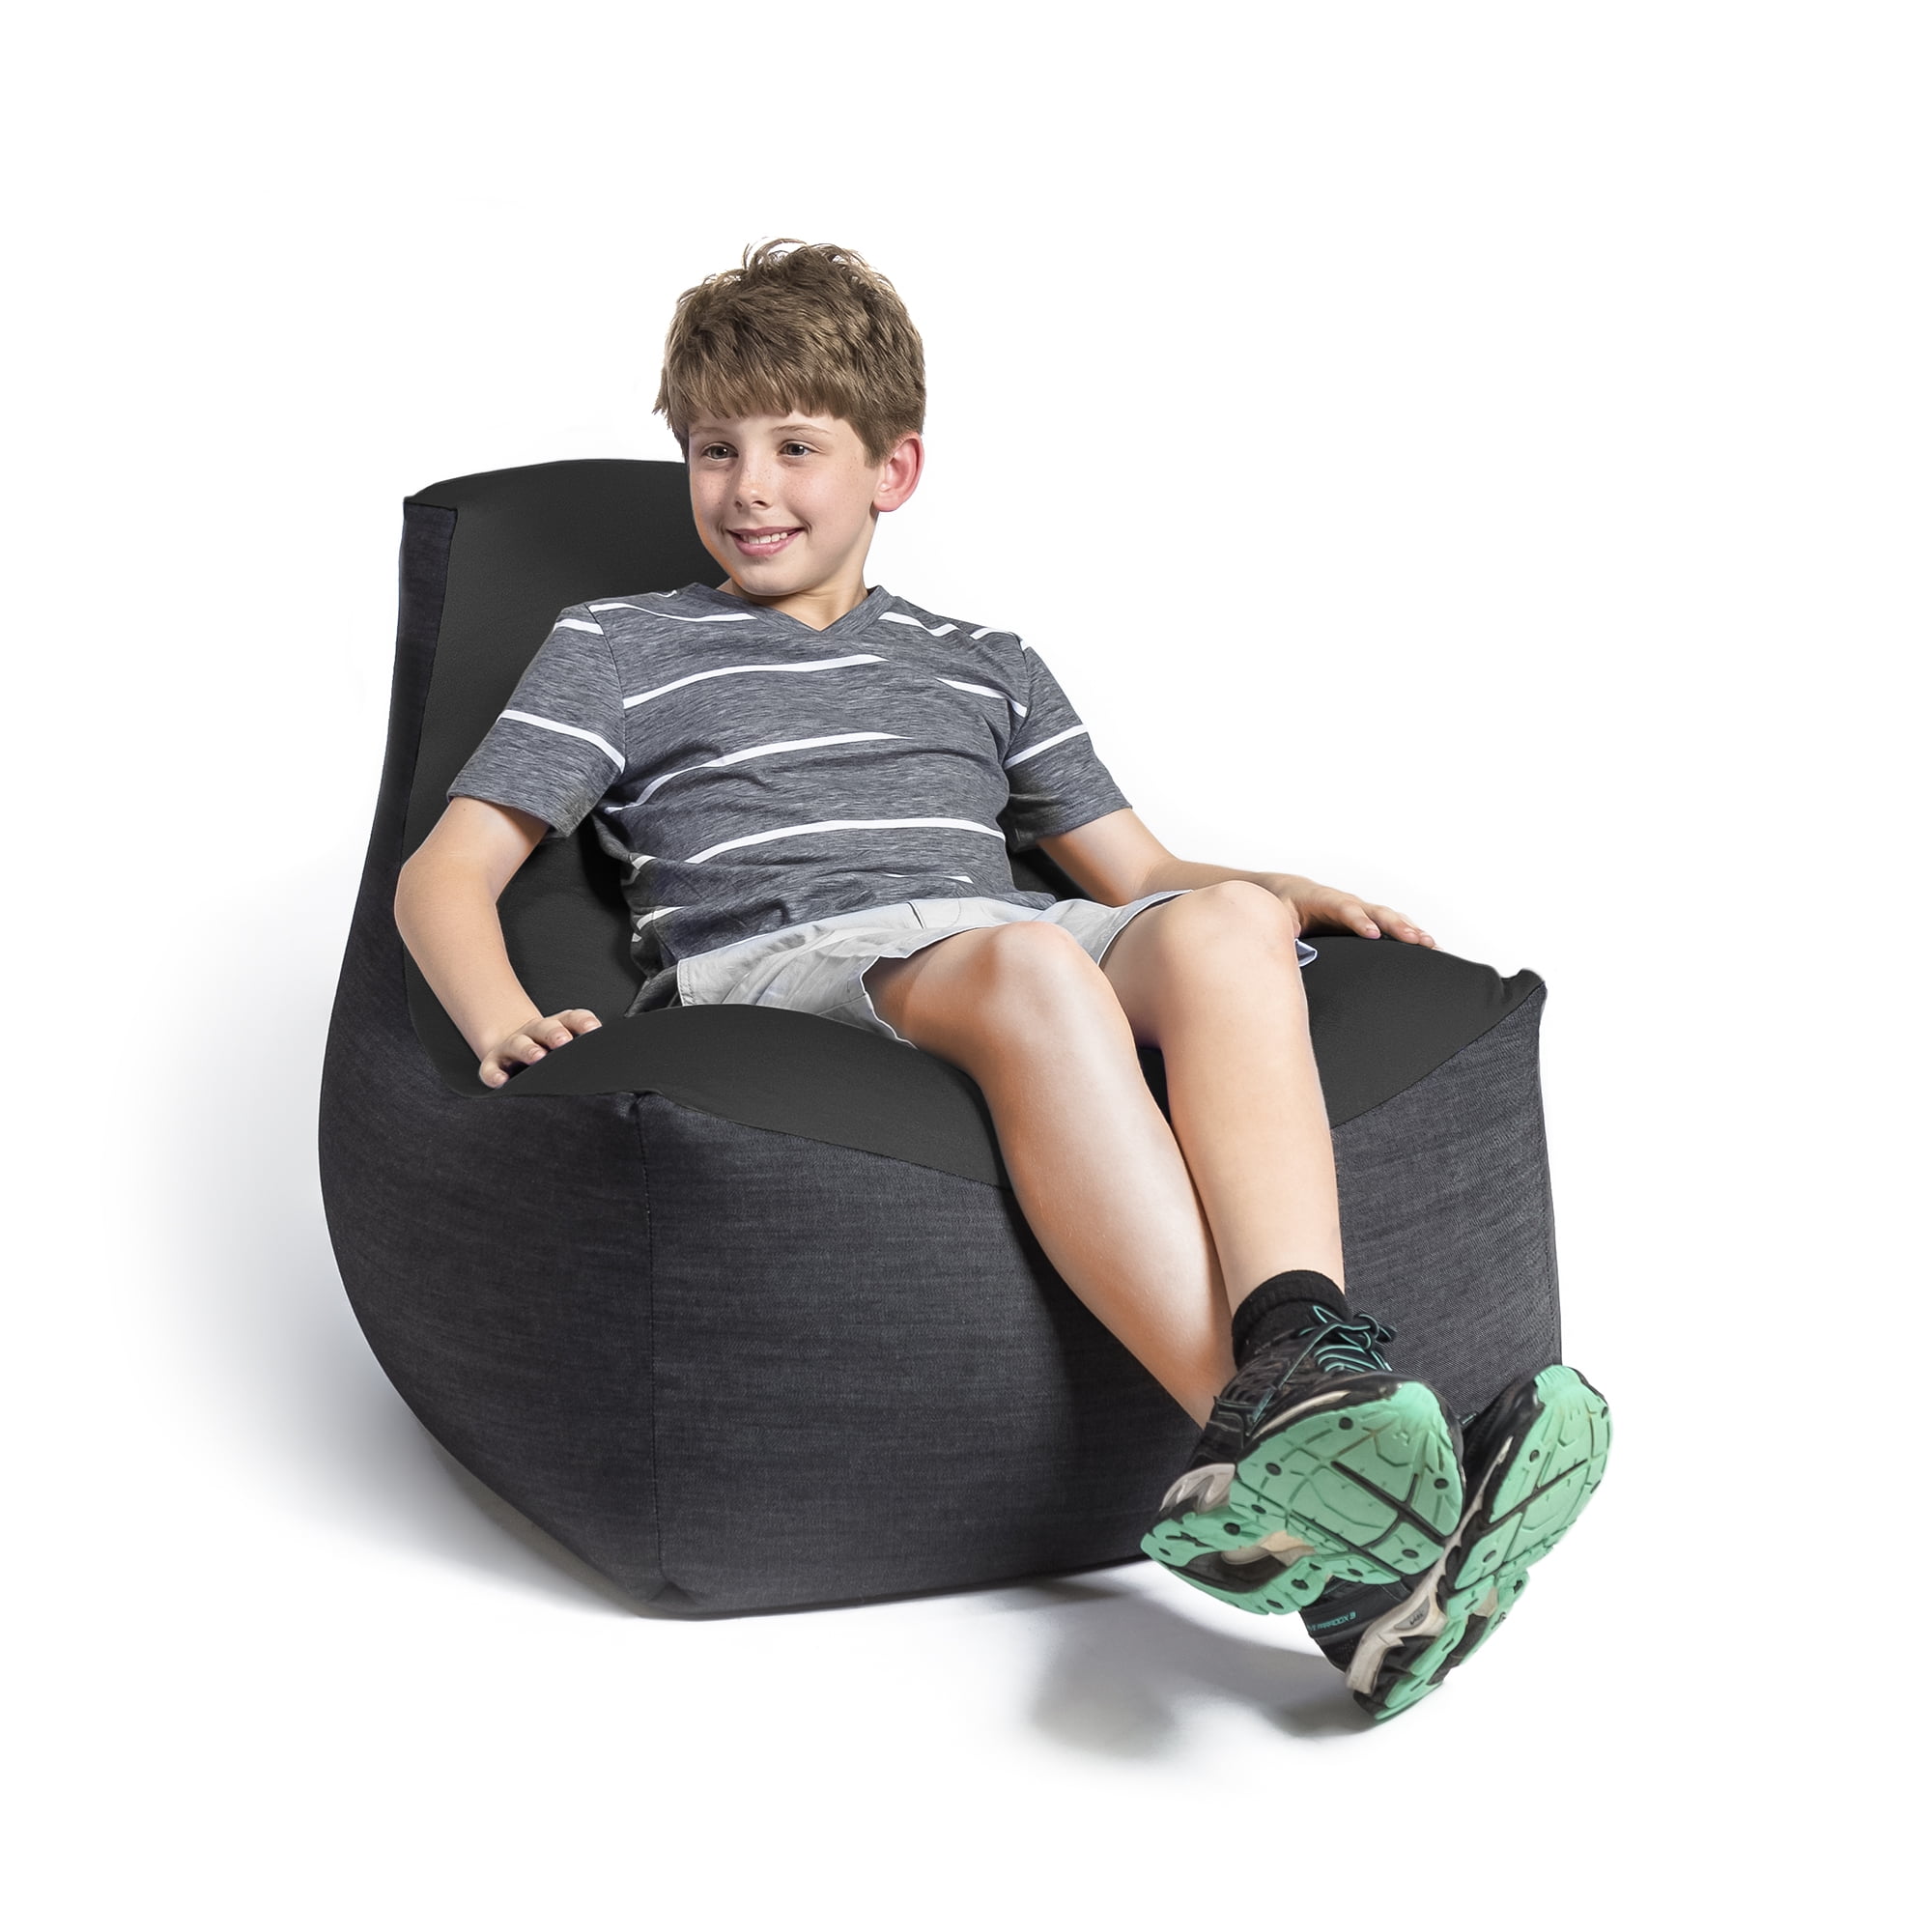 Jaxx Strato Spandex/Denim Comfy Bean Bag Game Chair for